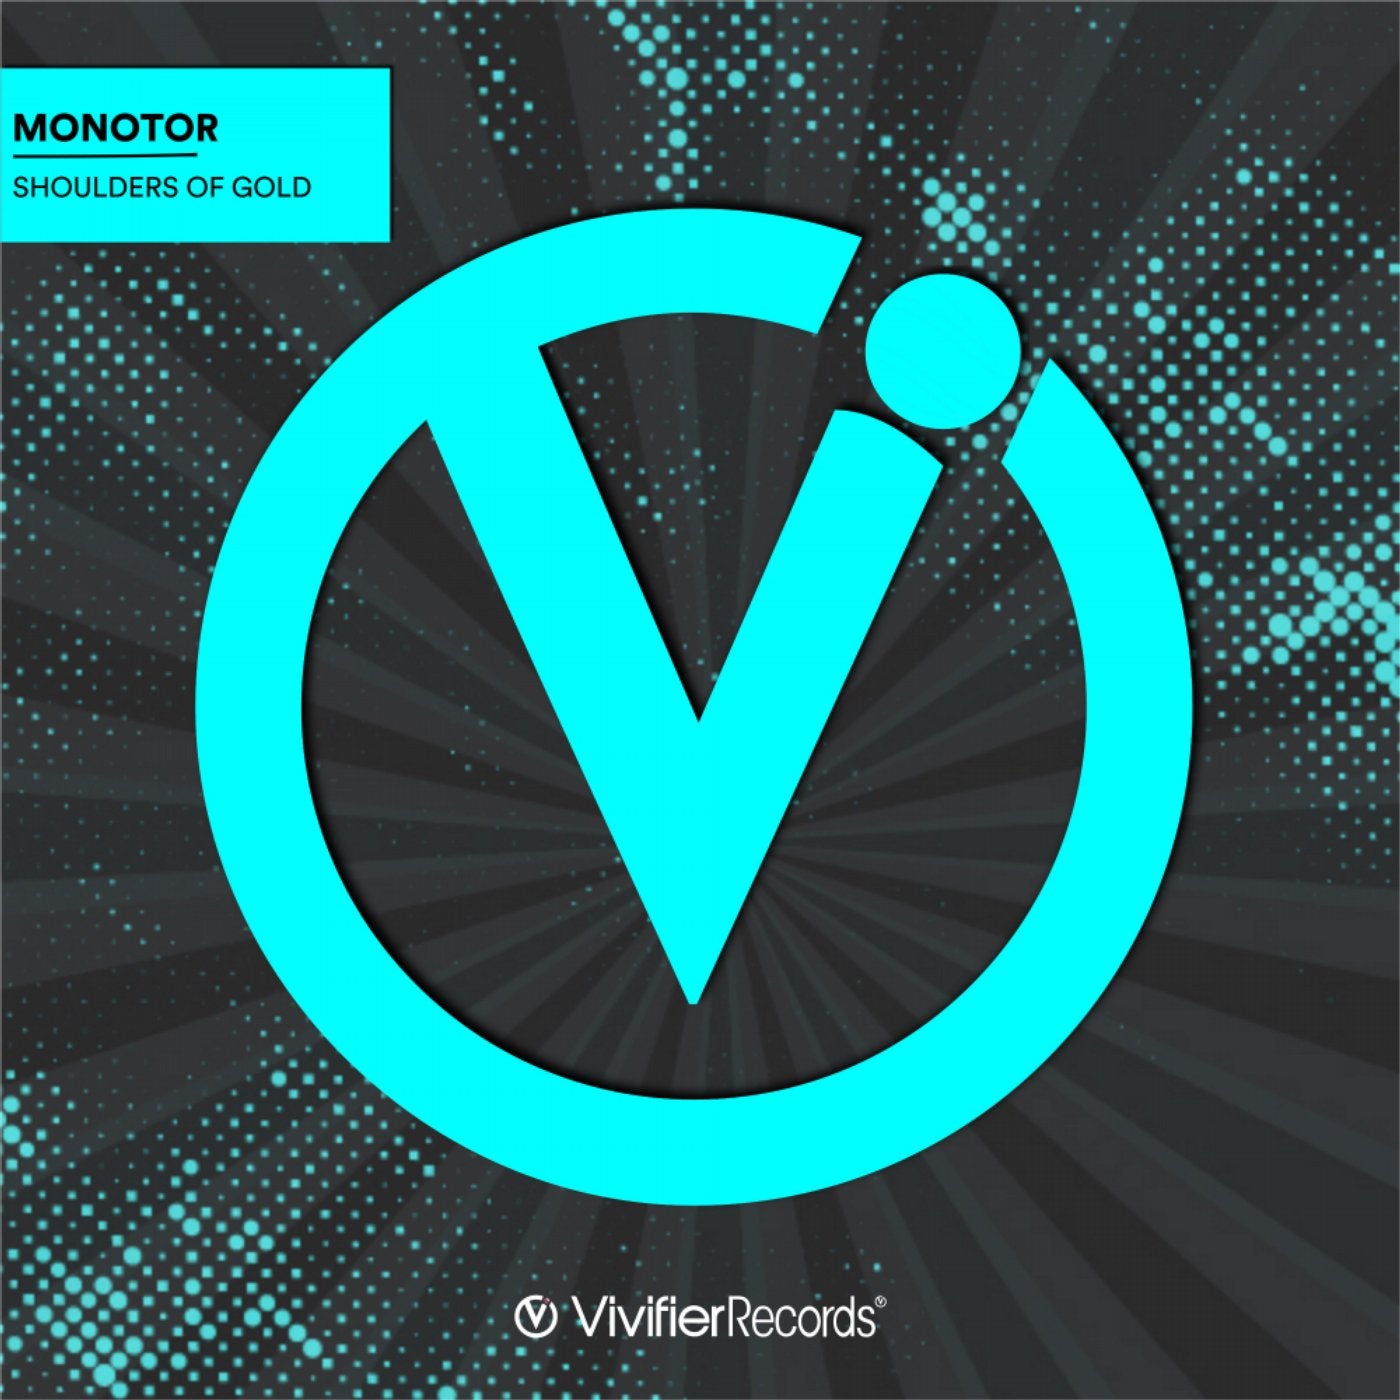 monotor music download - Beatport